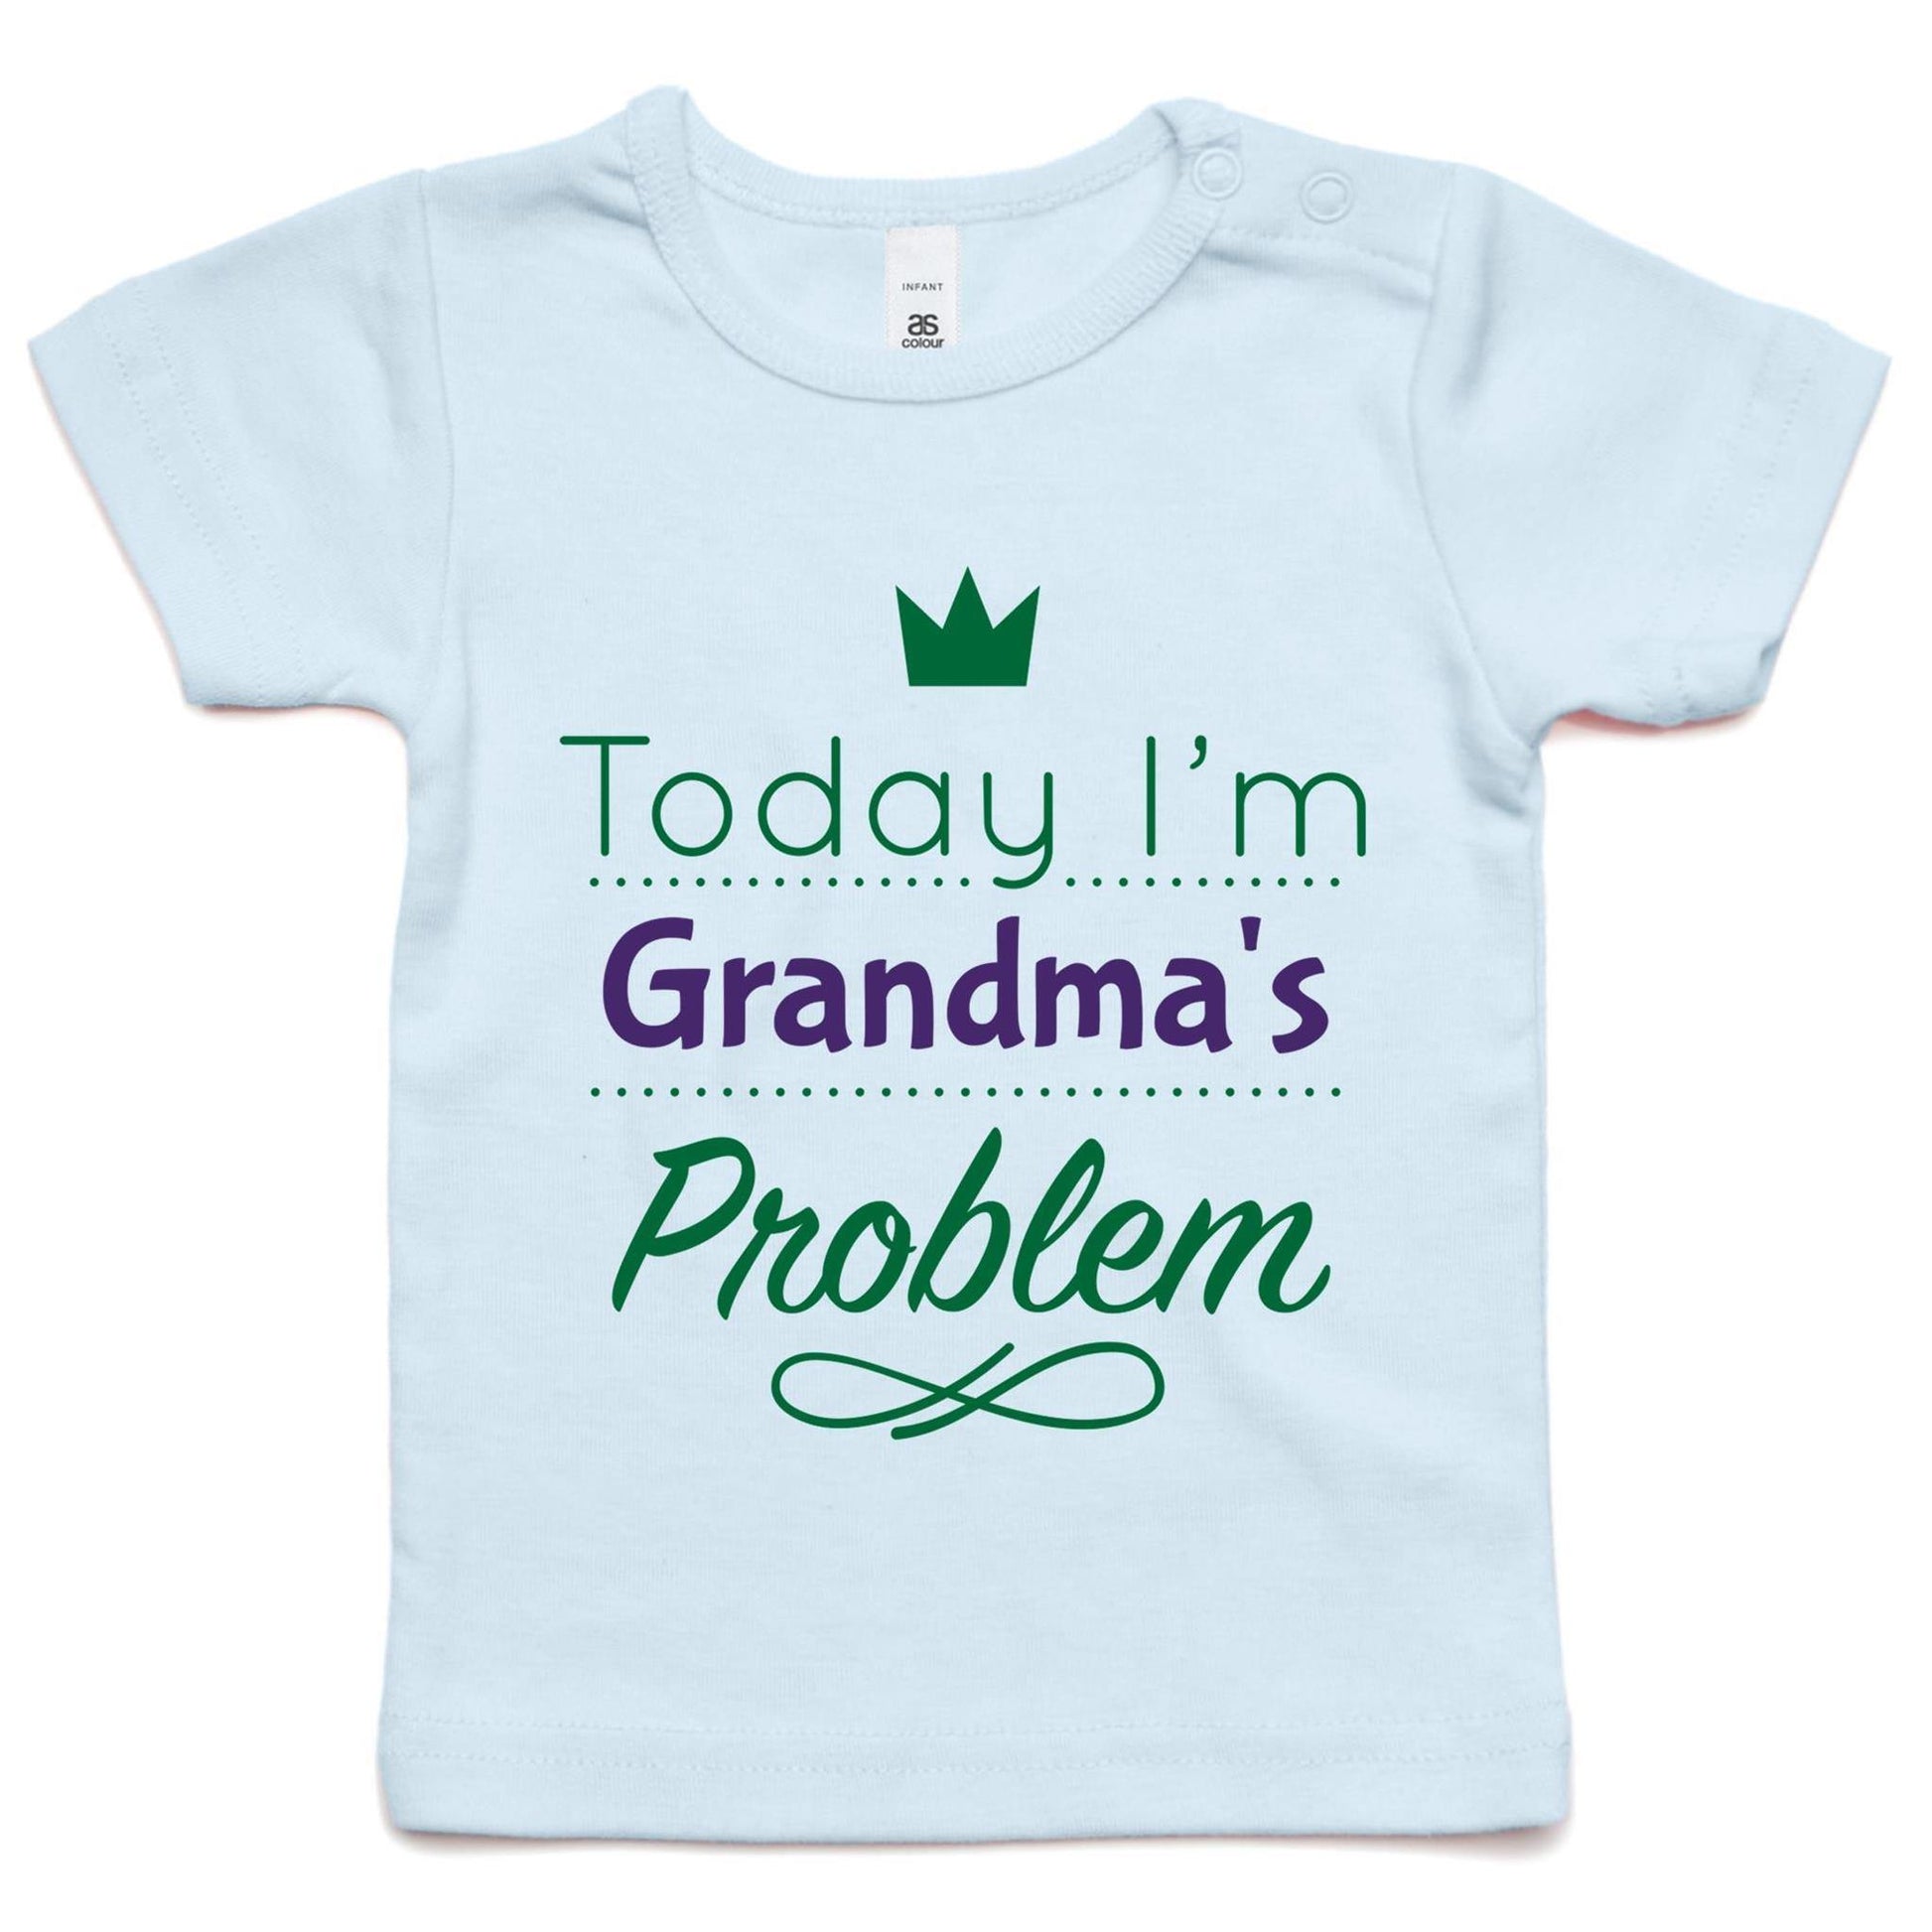 Today I'm Grandma's Problem - Baby T-shirt Powder Blue Baby T-shirt kids